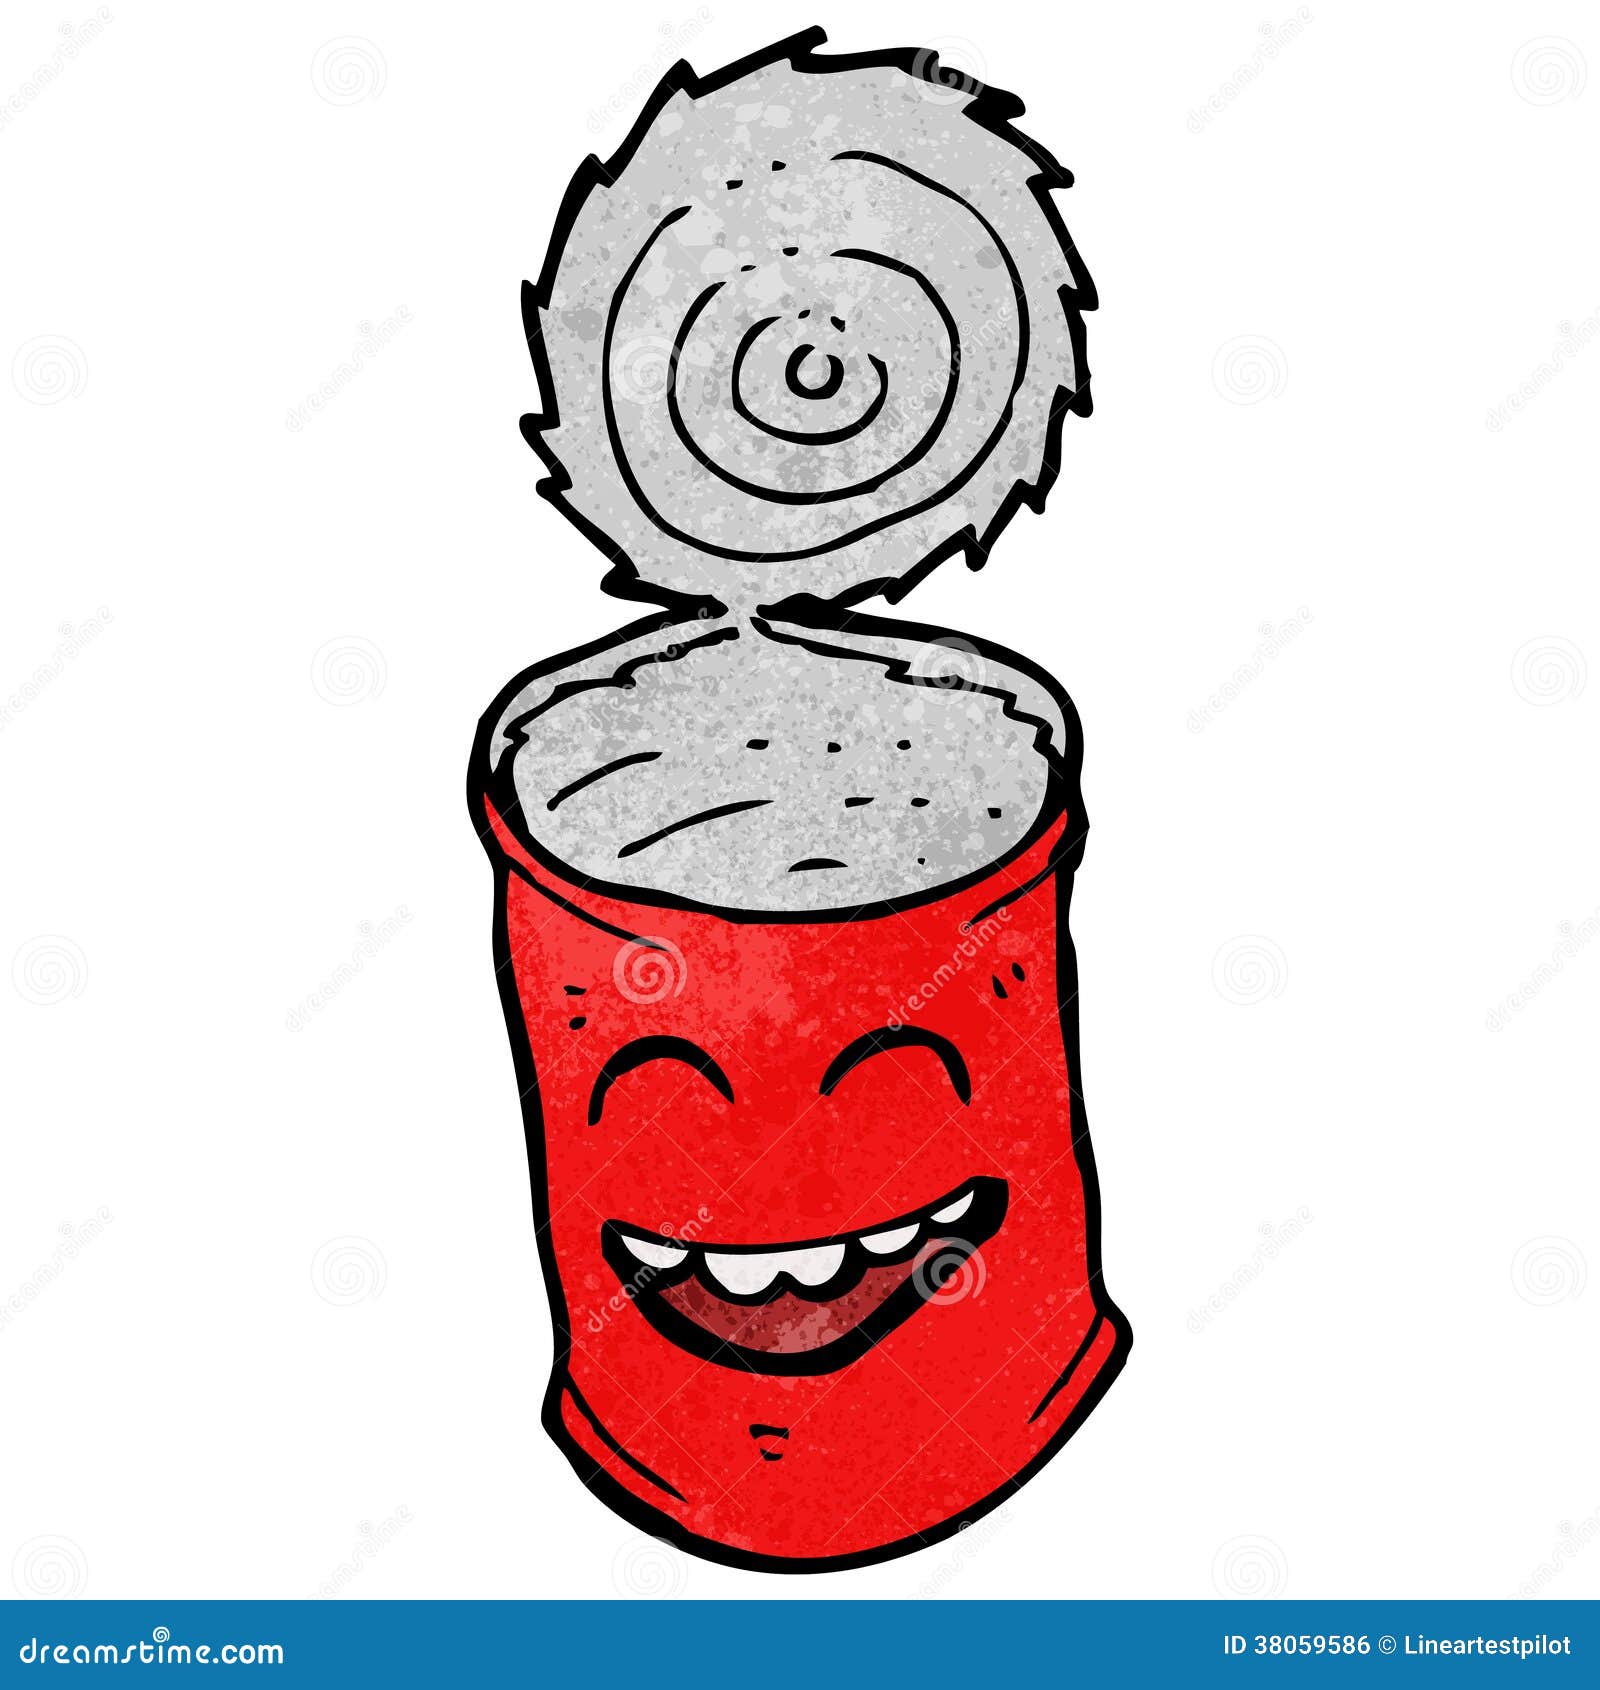 Cartoon tin can stock vector. Illustration of character - 38059586